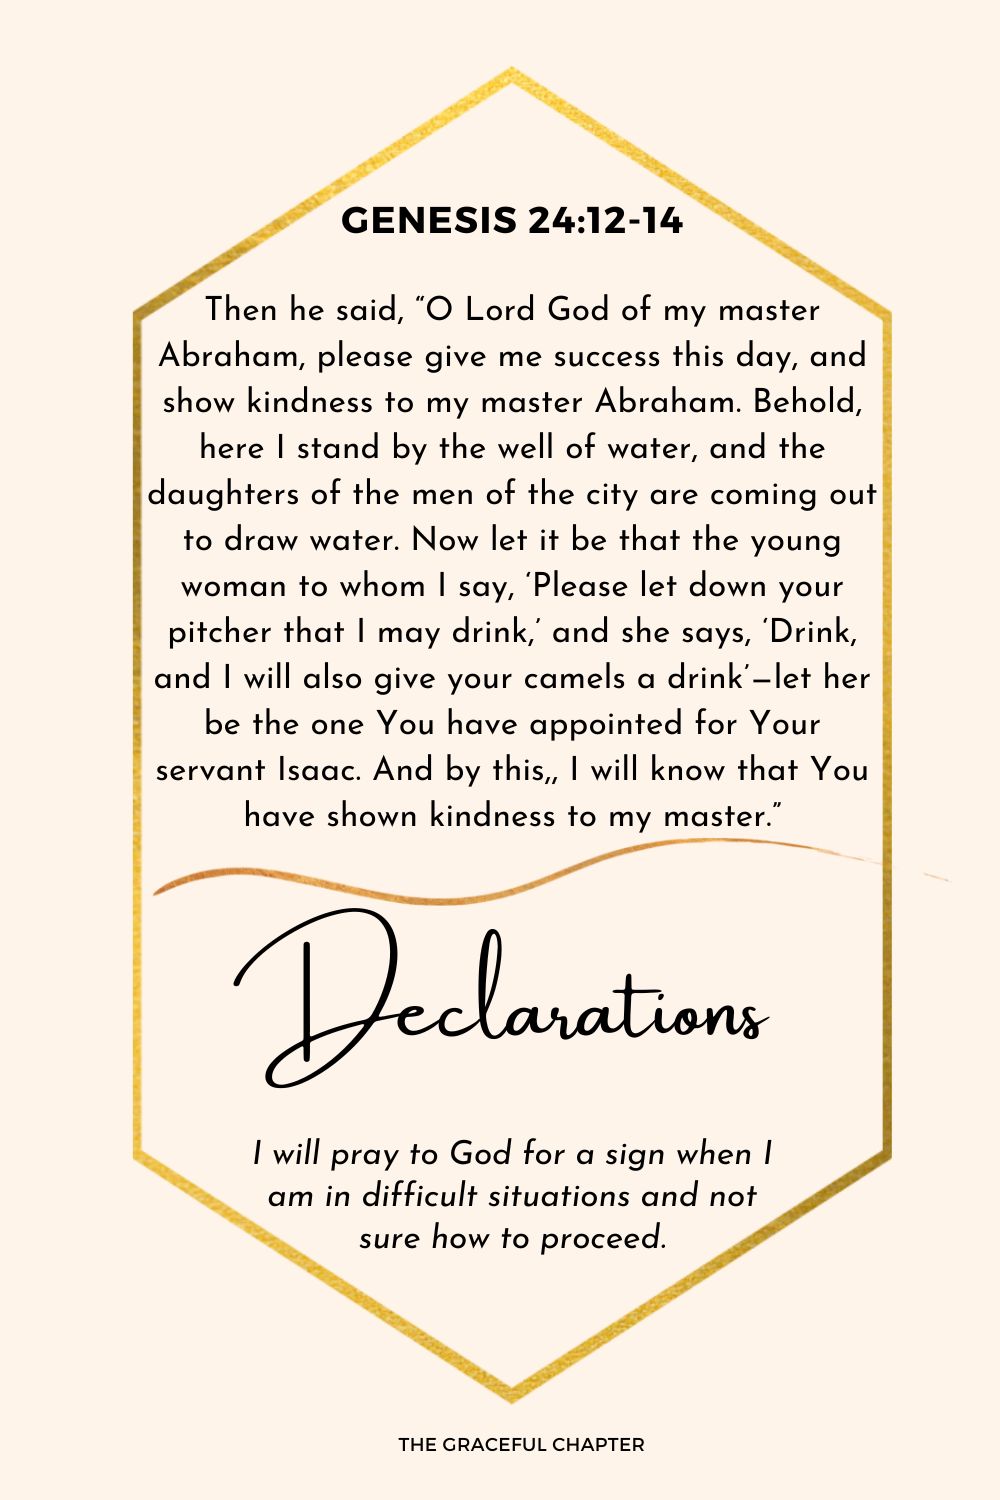 Declaration: Genesis 24:12-14